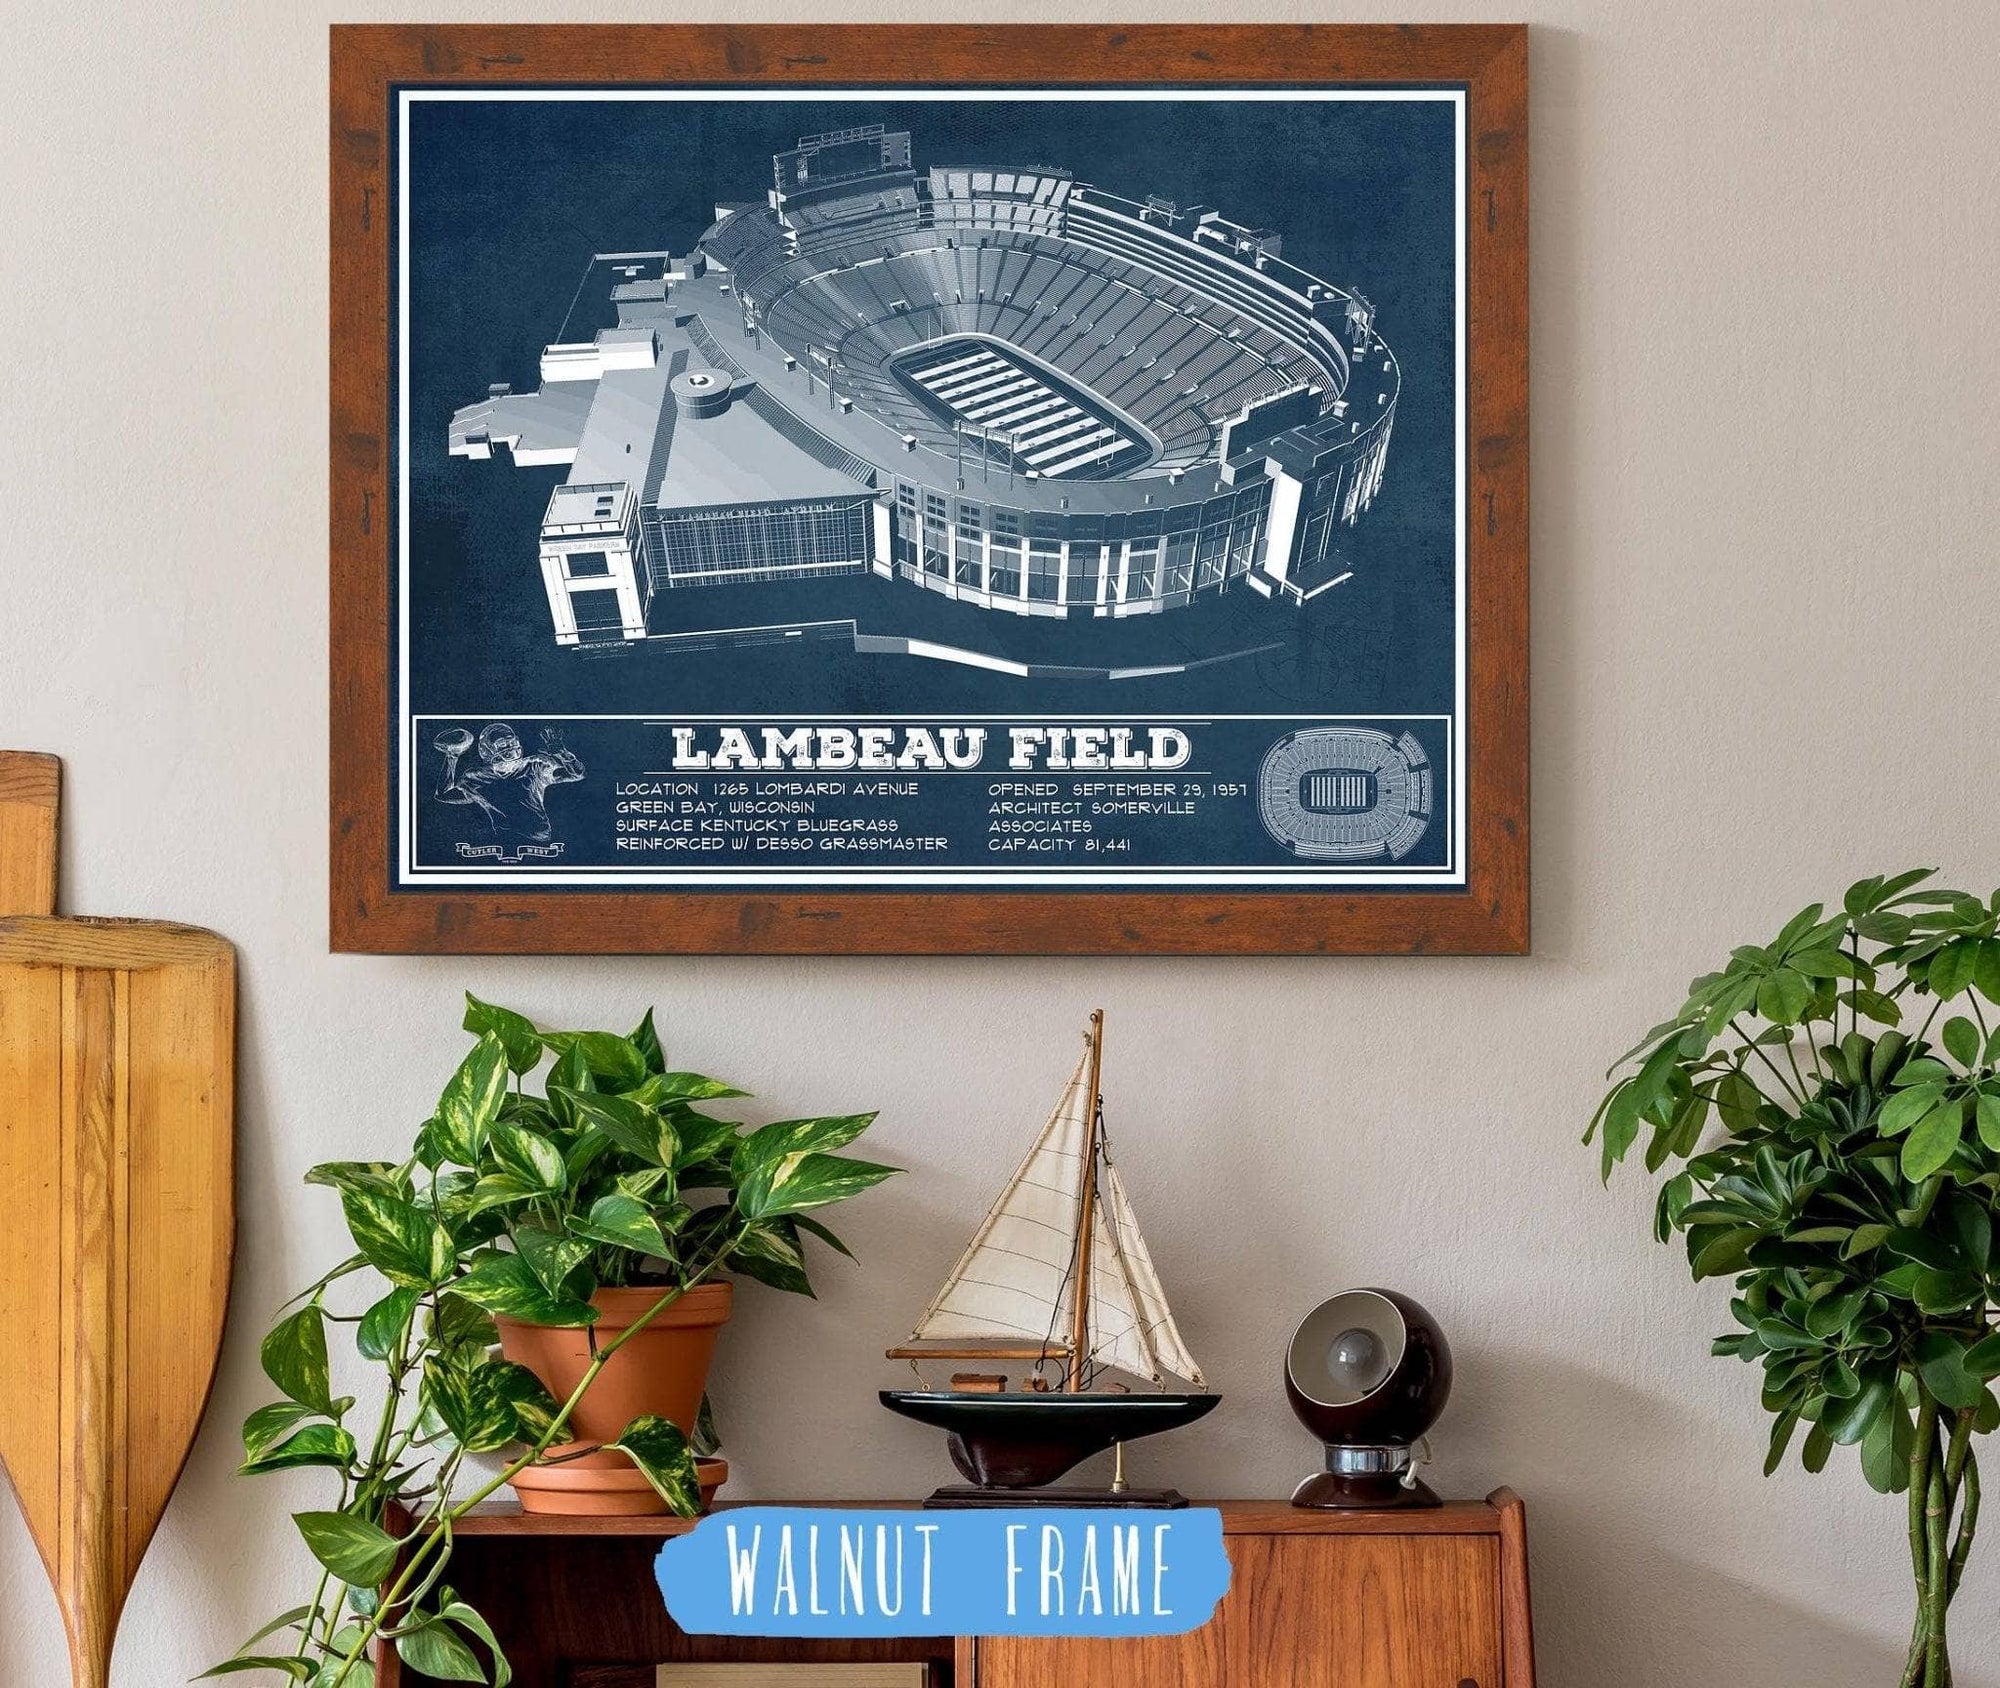 Cutler West Pro Football Collection 14" x 11" / Walnut Frame Green Bay Packers - Lambeau Field Vintage Football Print 698877220_66031